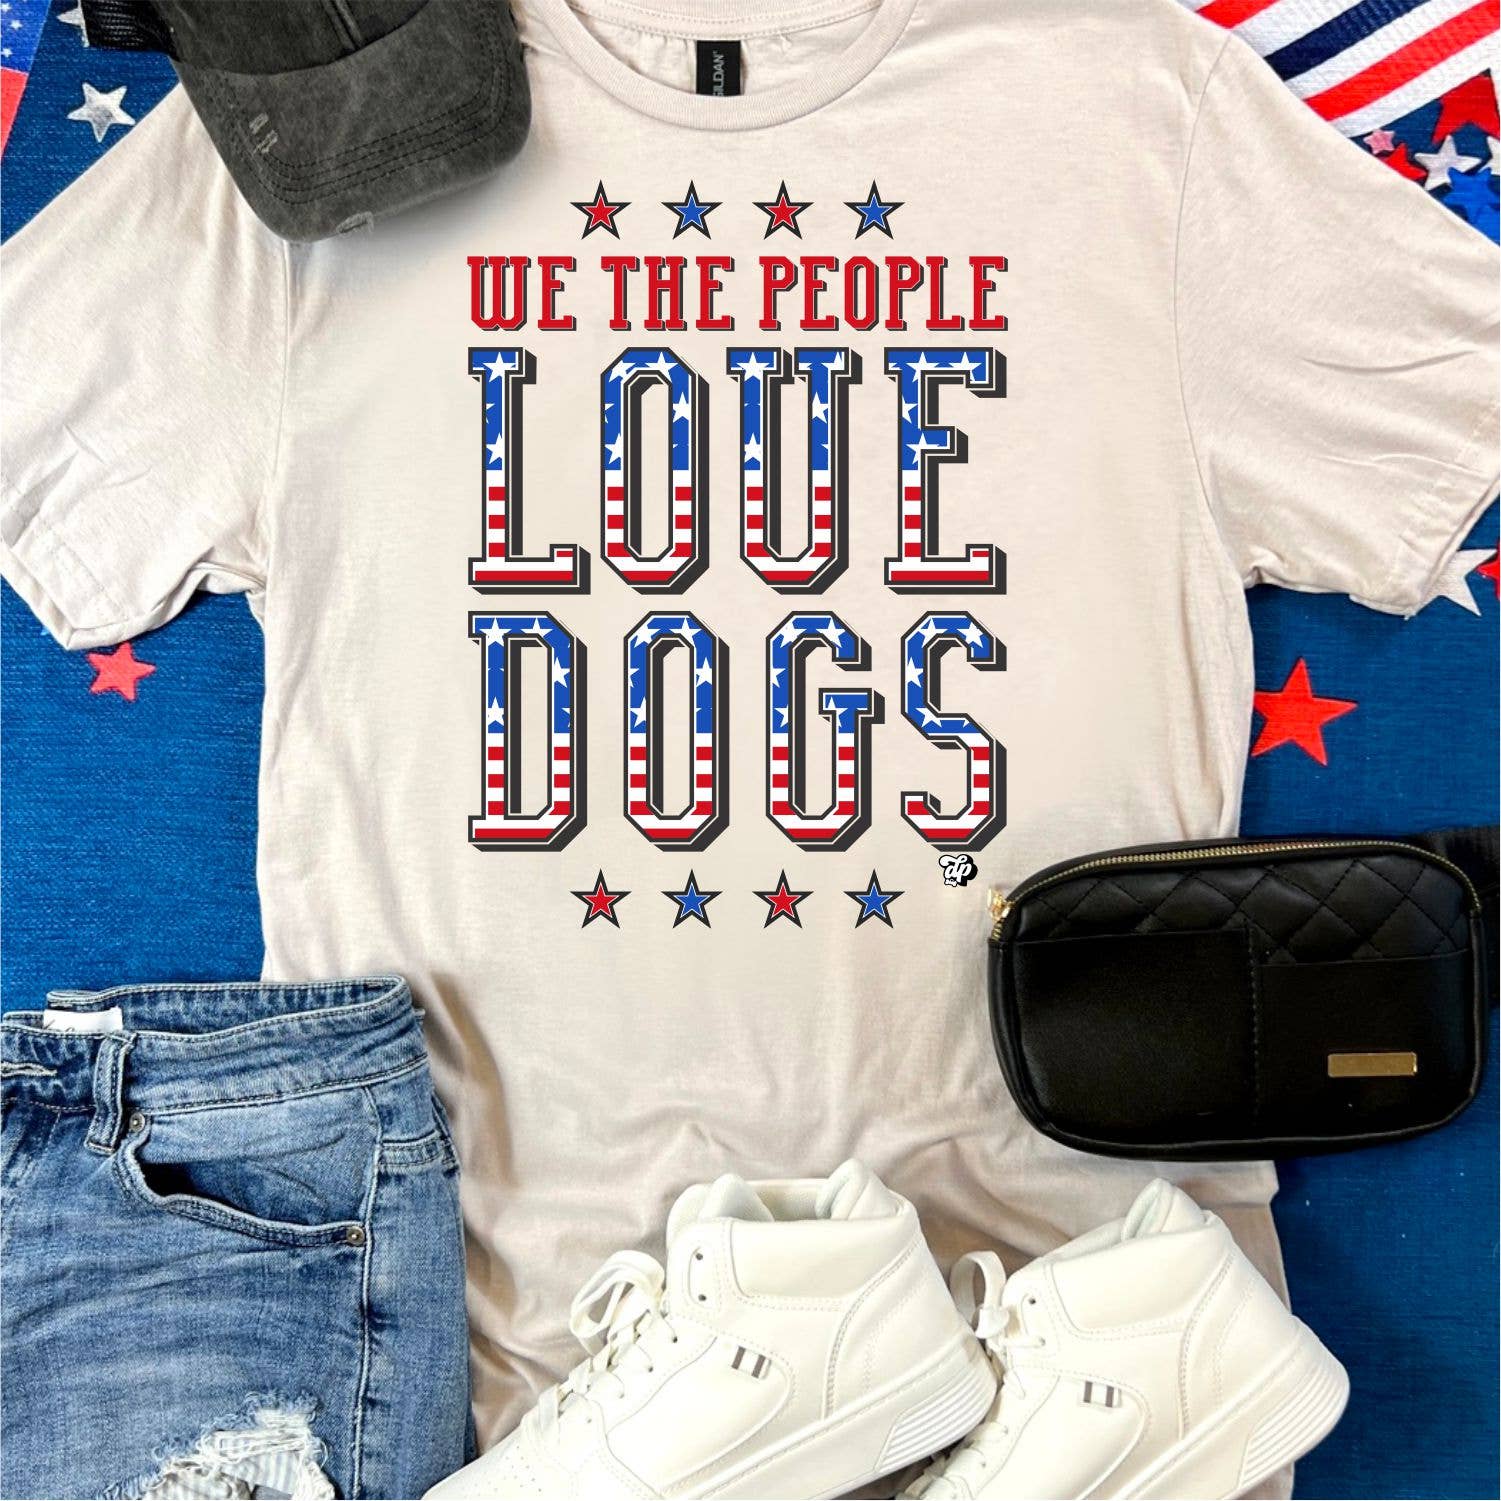 We the People Love Dogs Tee